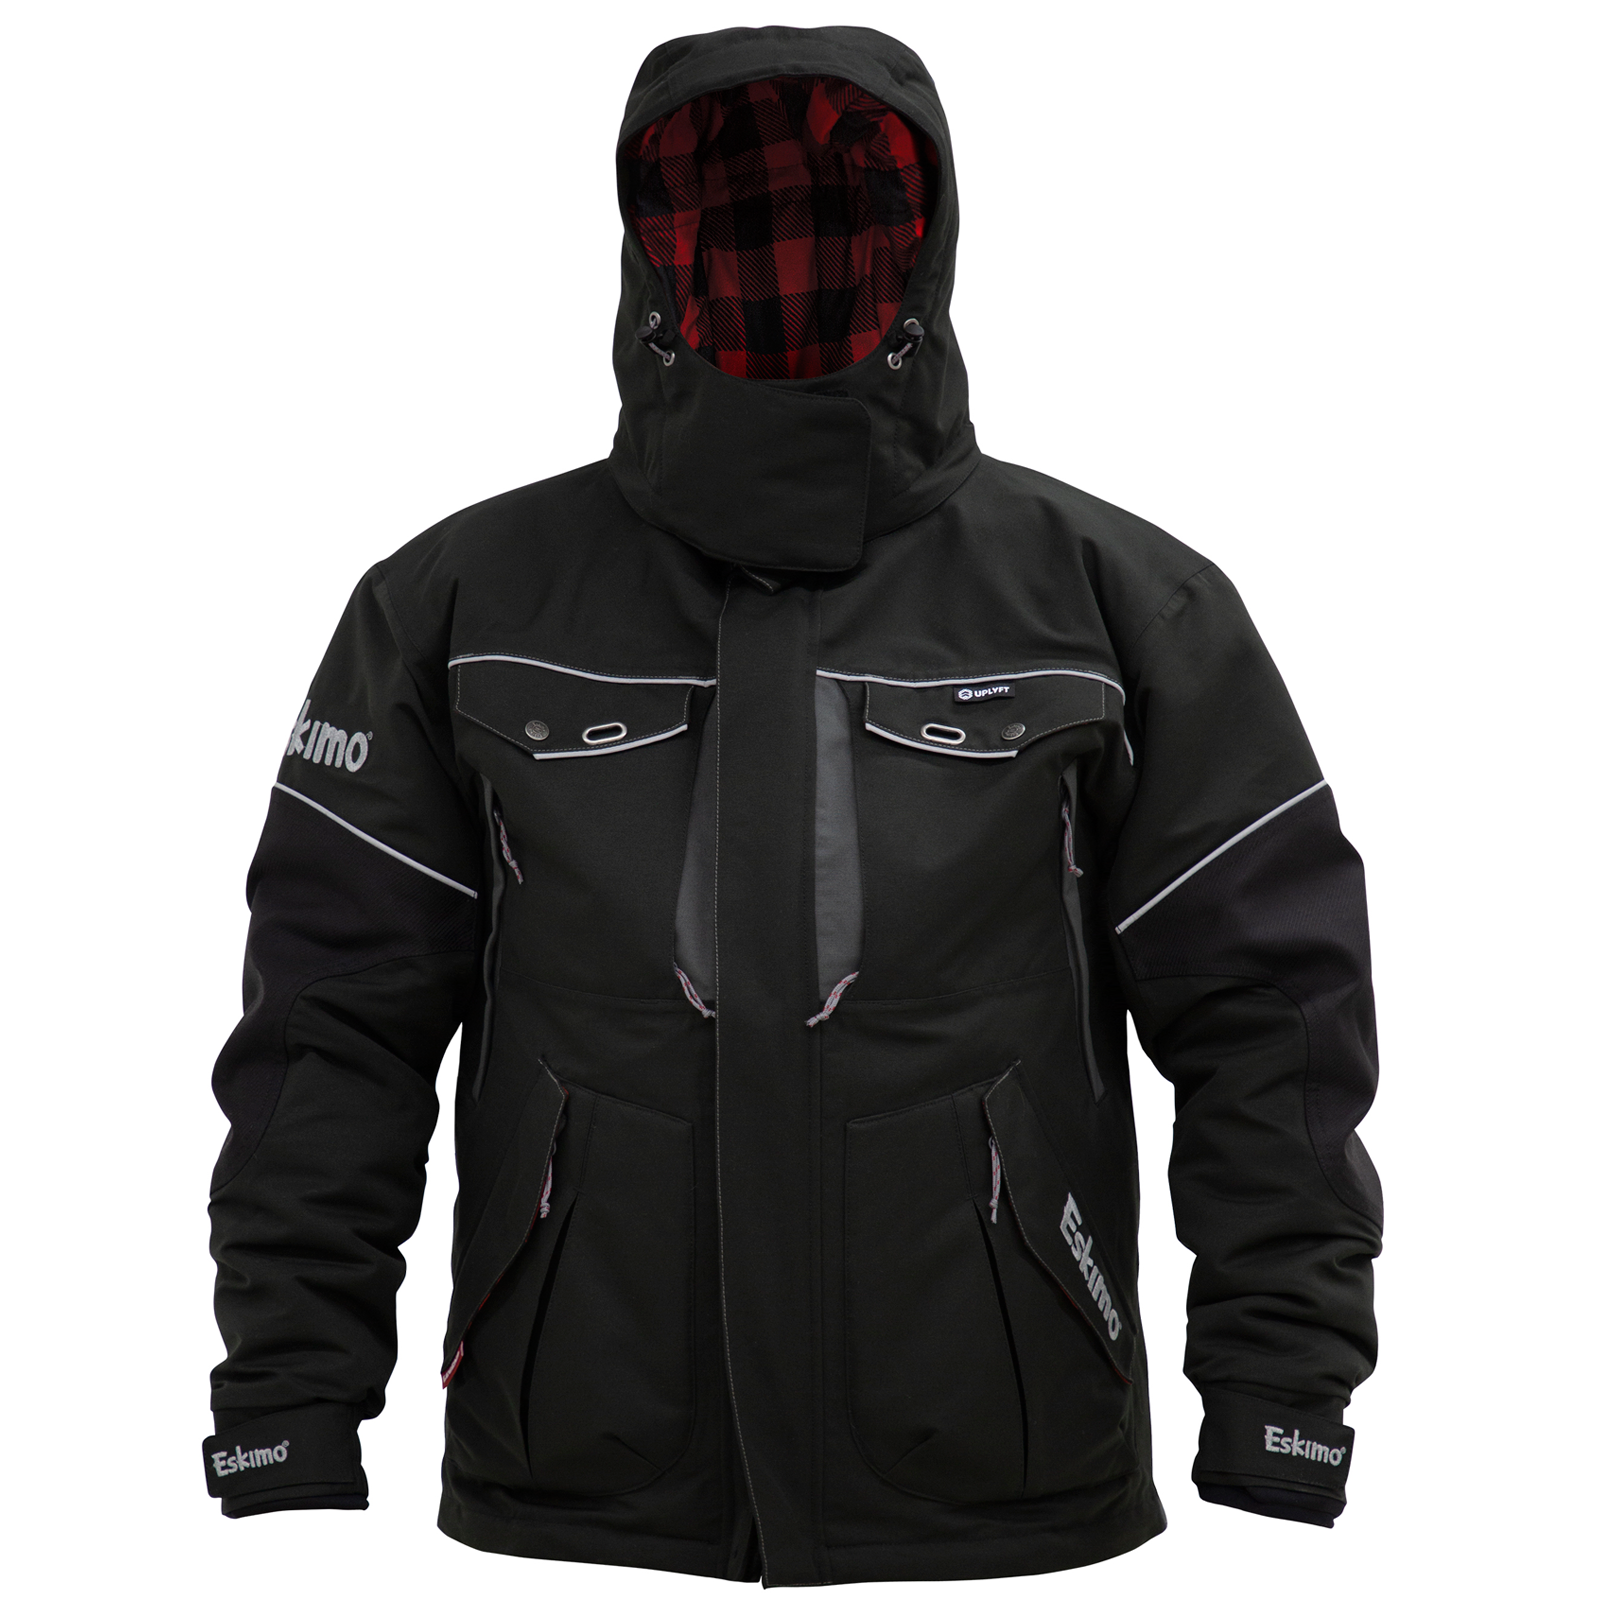 ESKIMO Legend Ice Fishing Jacket - Men's Multi (Size: M)